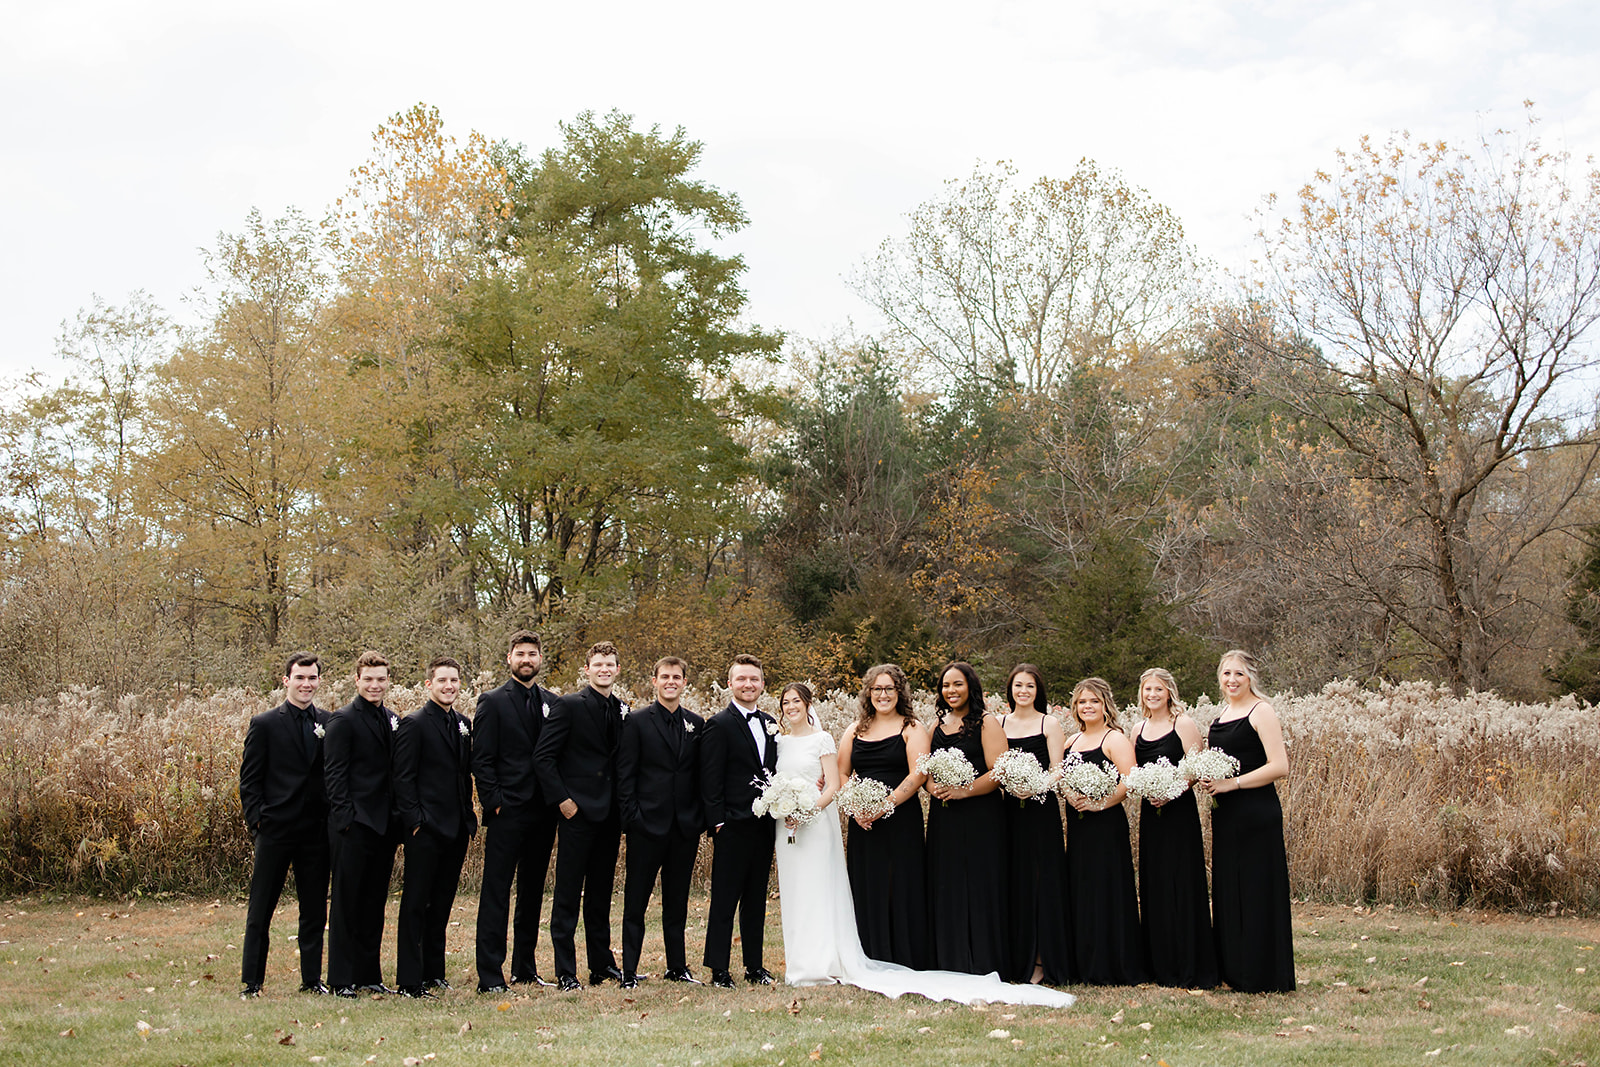 wedding party group photos | detroit wedding photographer 